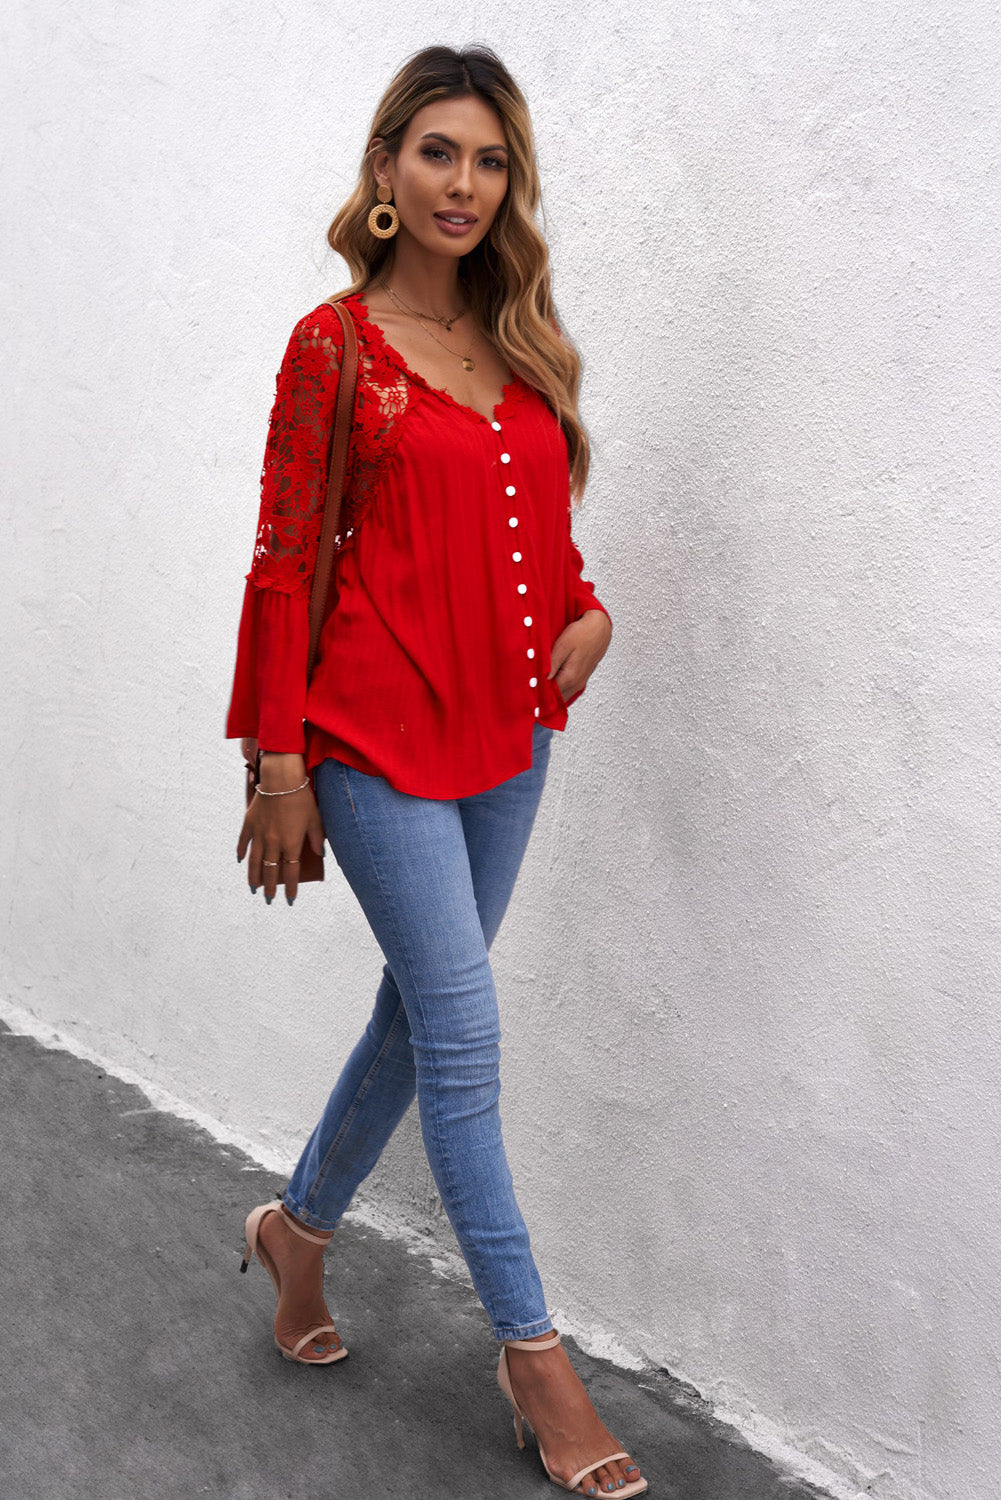 Crochet Red Lace Shoulder Splicing Flowy Shirt